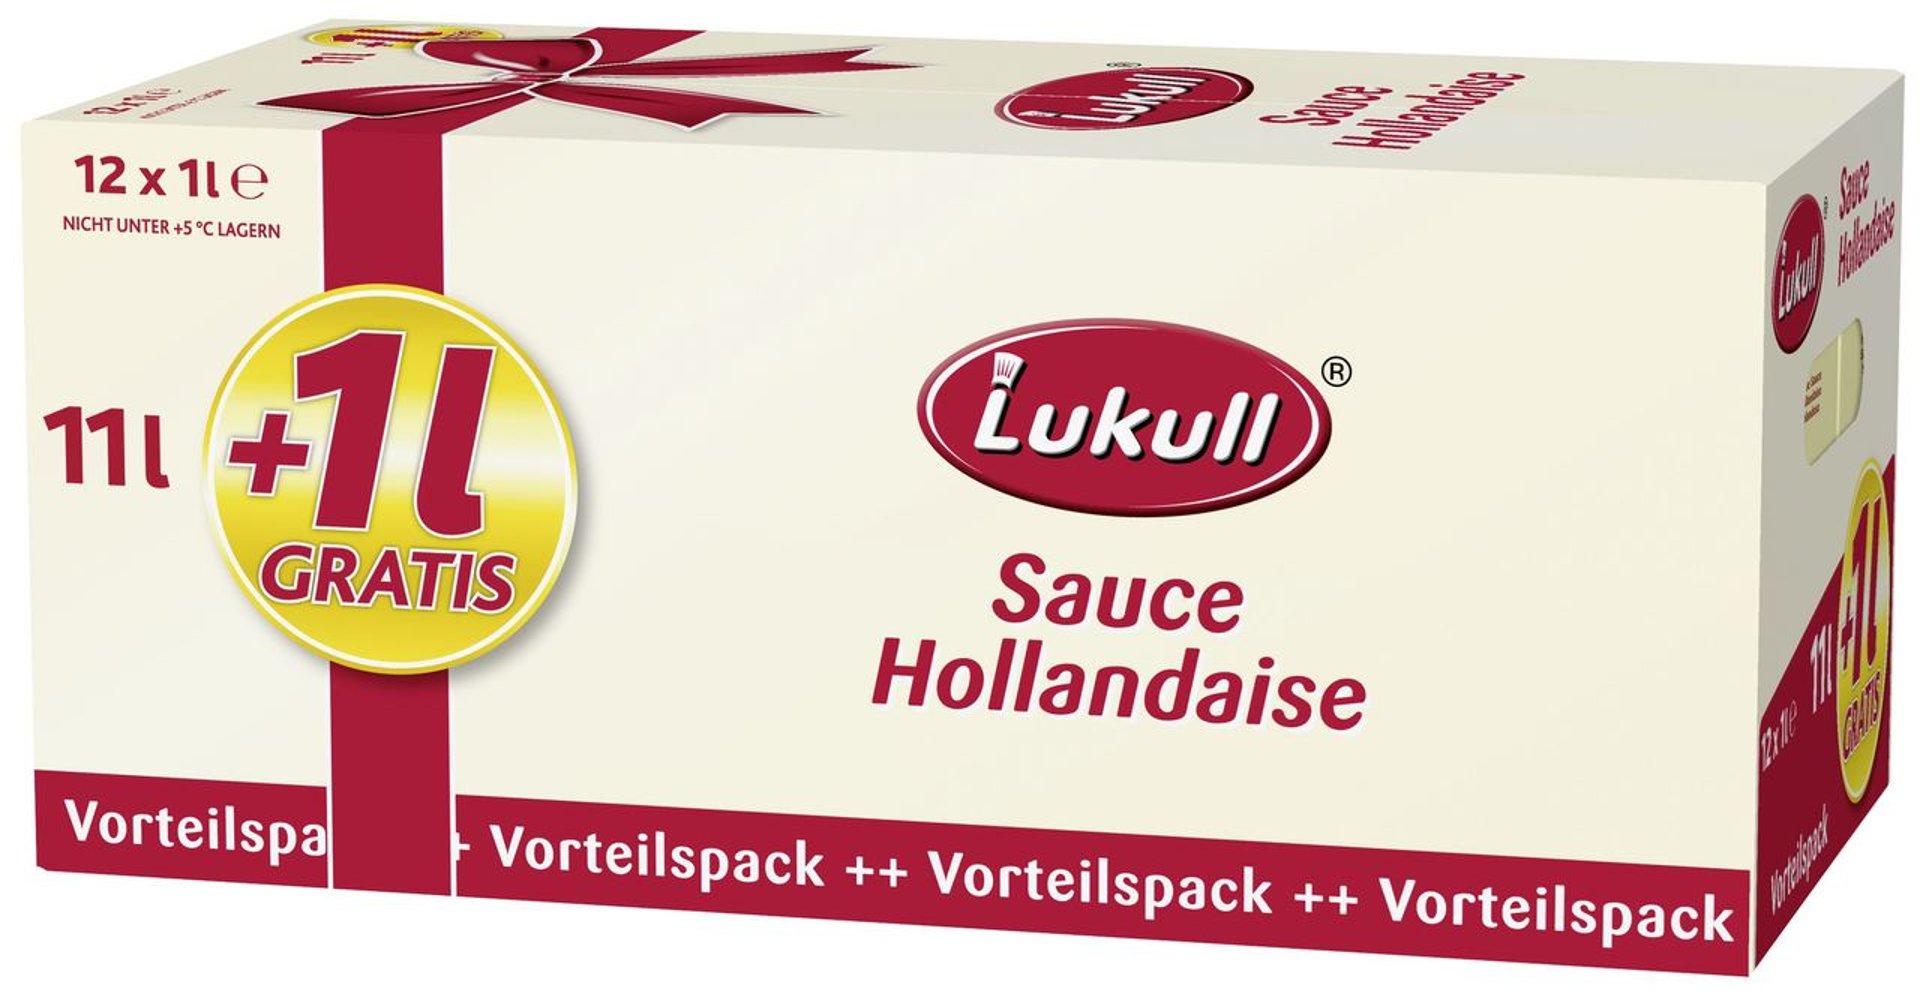 Lukull - Sauce Hollandaise - 971 g Karton